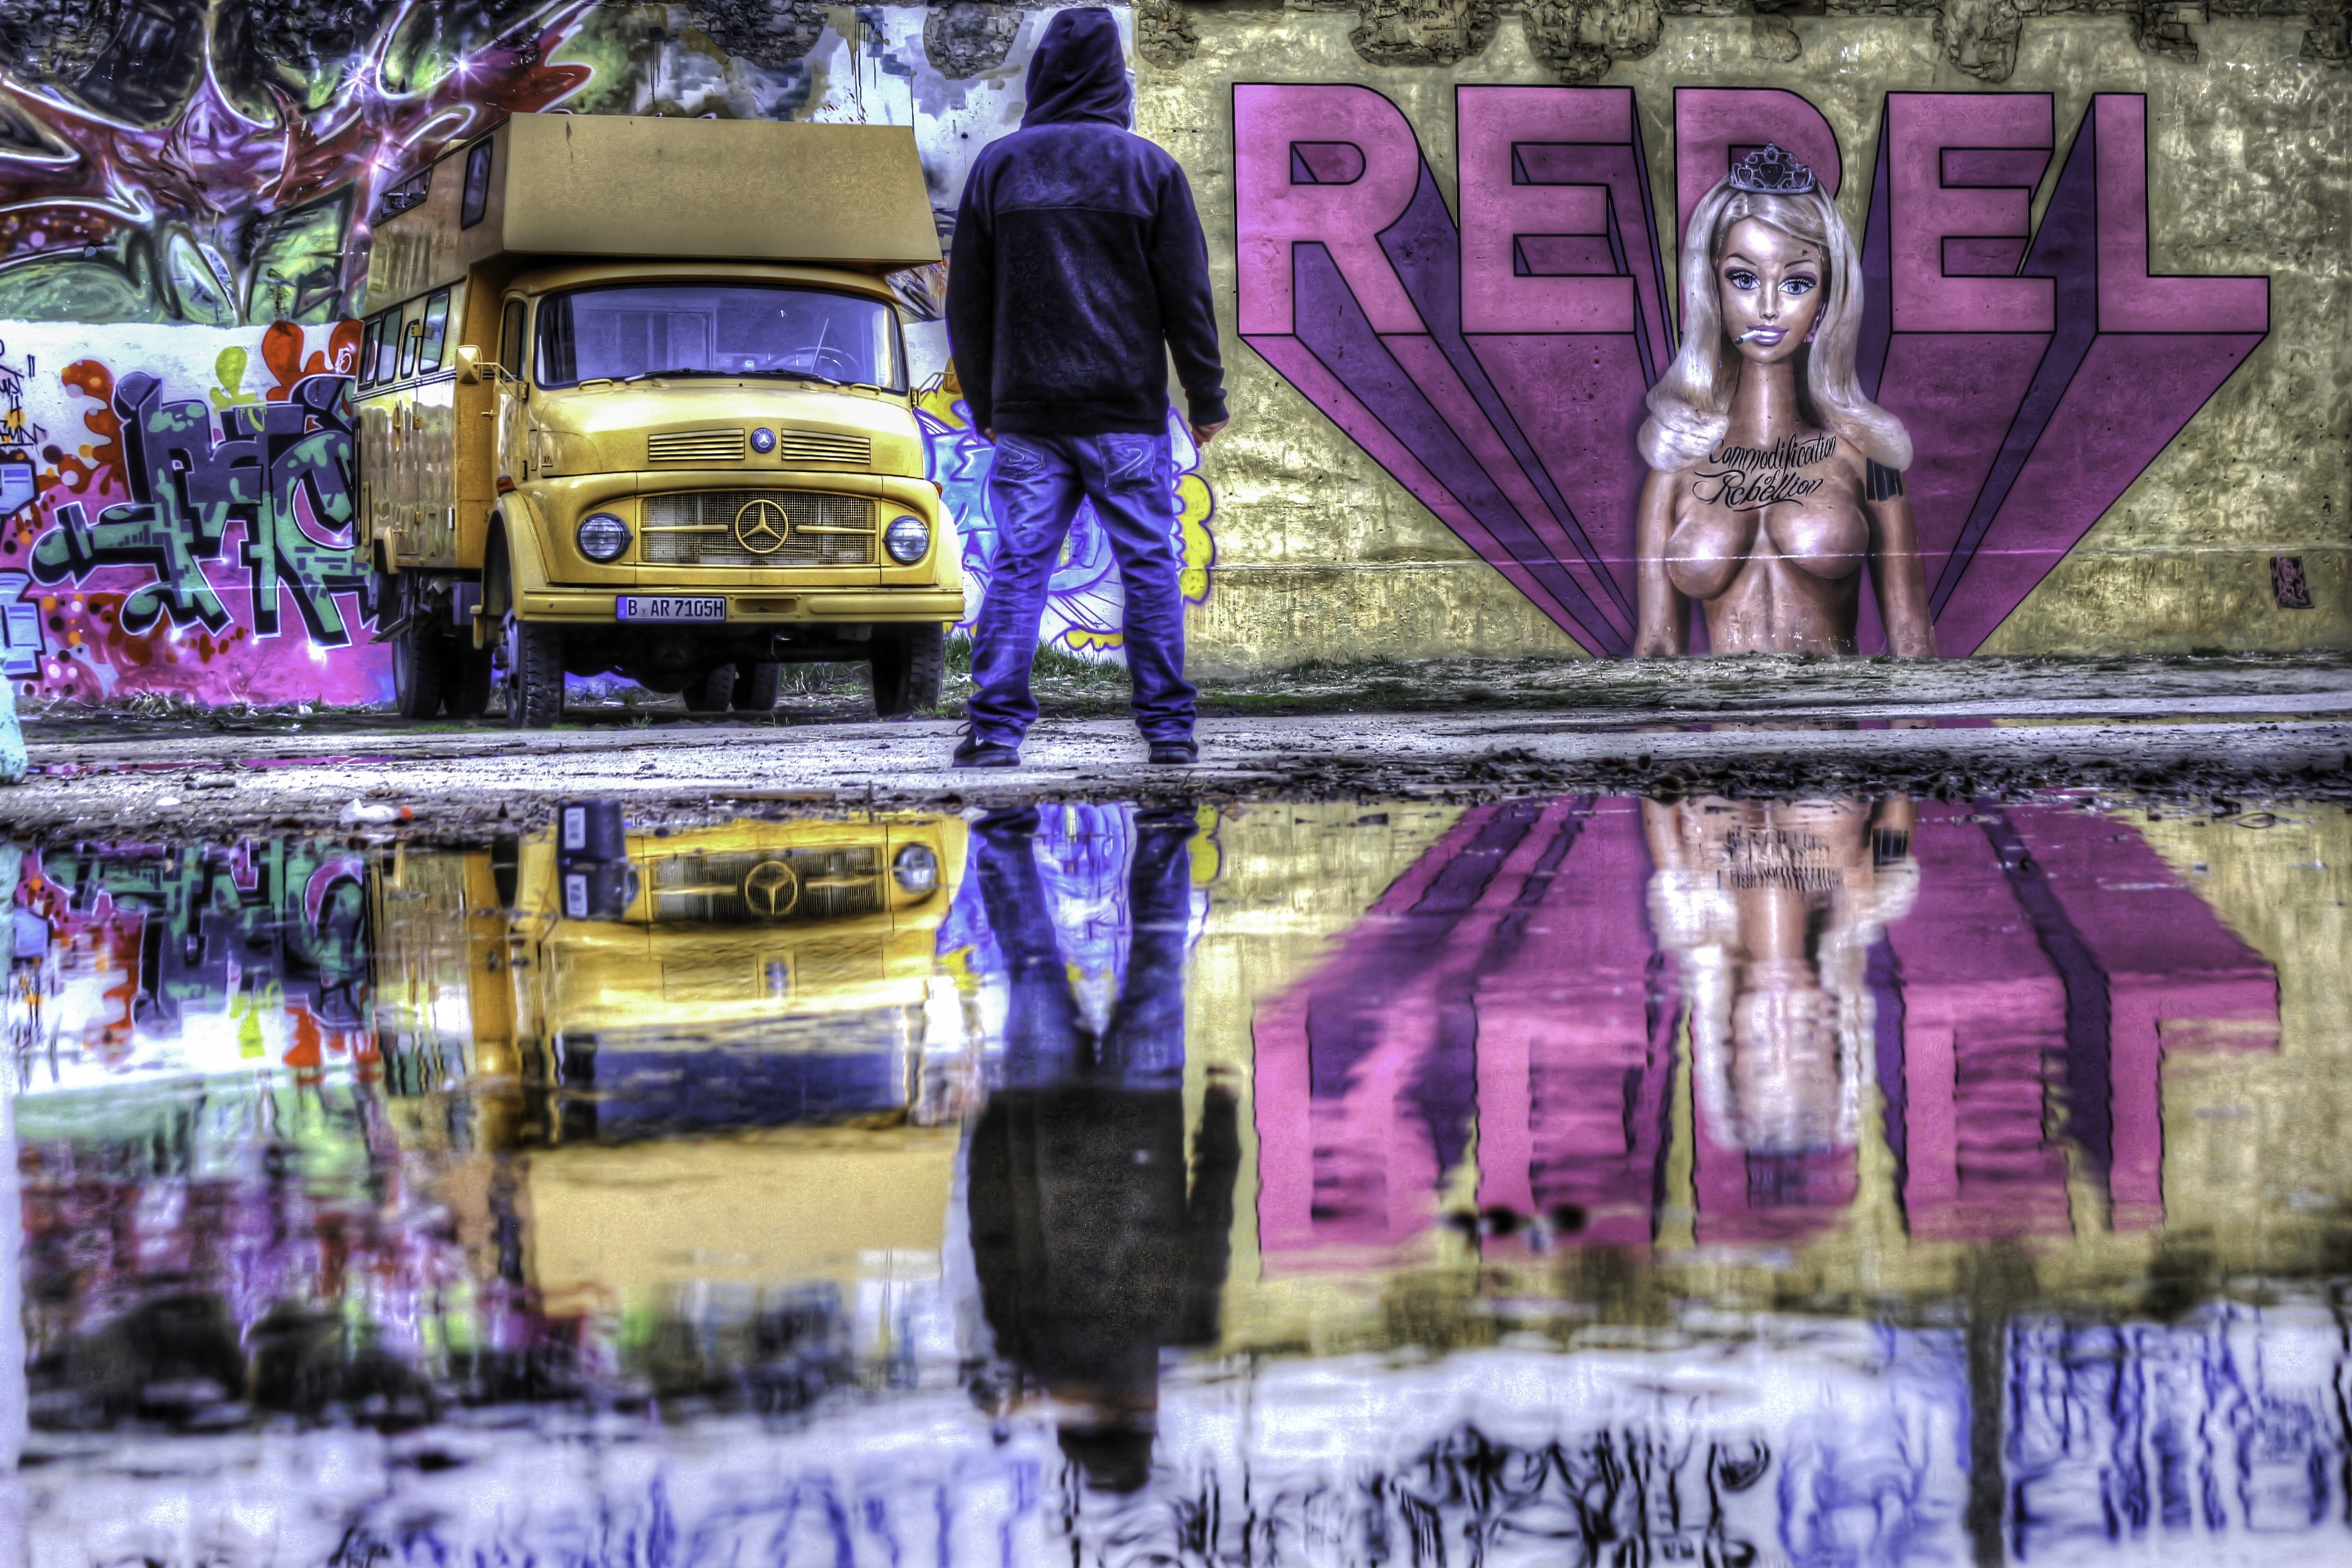 Rebel for Live / Berlin HDR